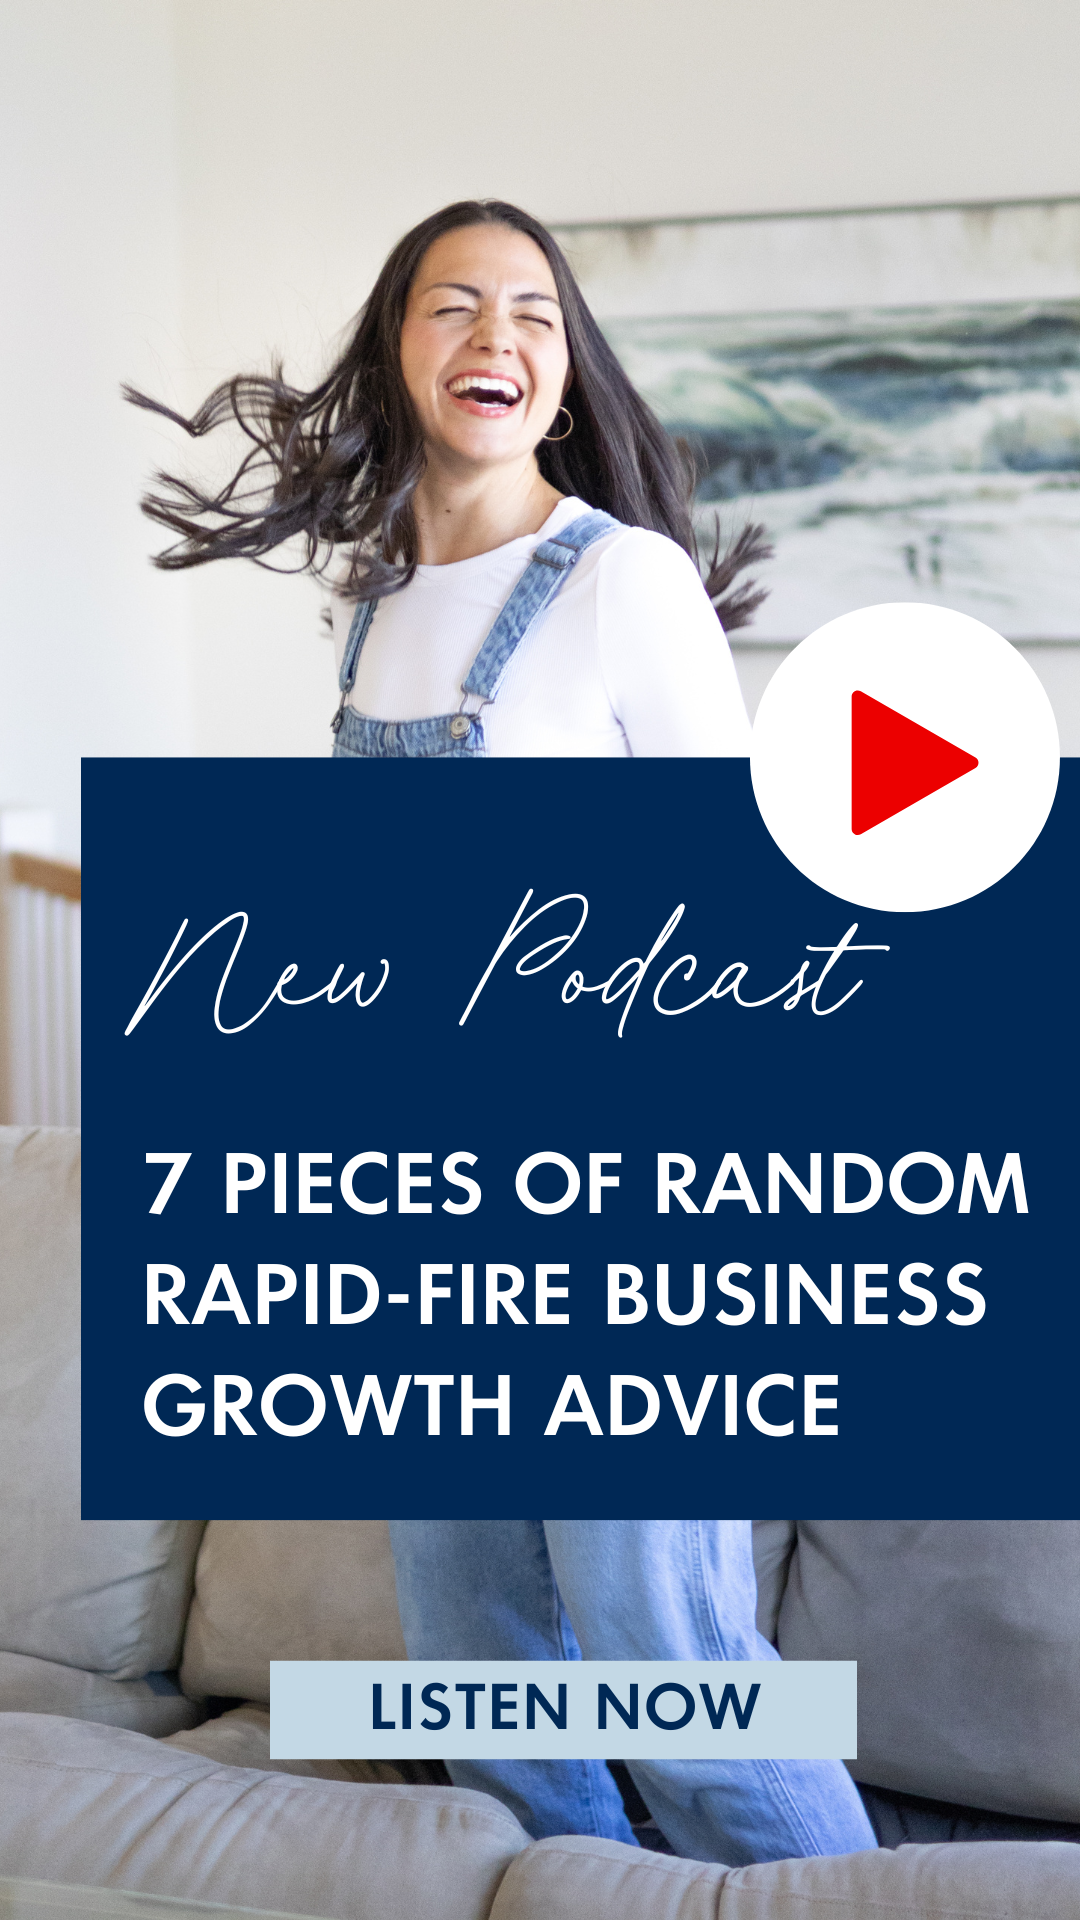 7 pieces of random rapid-fire business growth advice